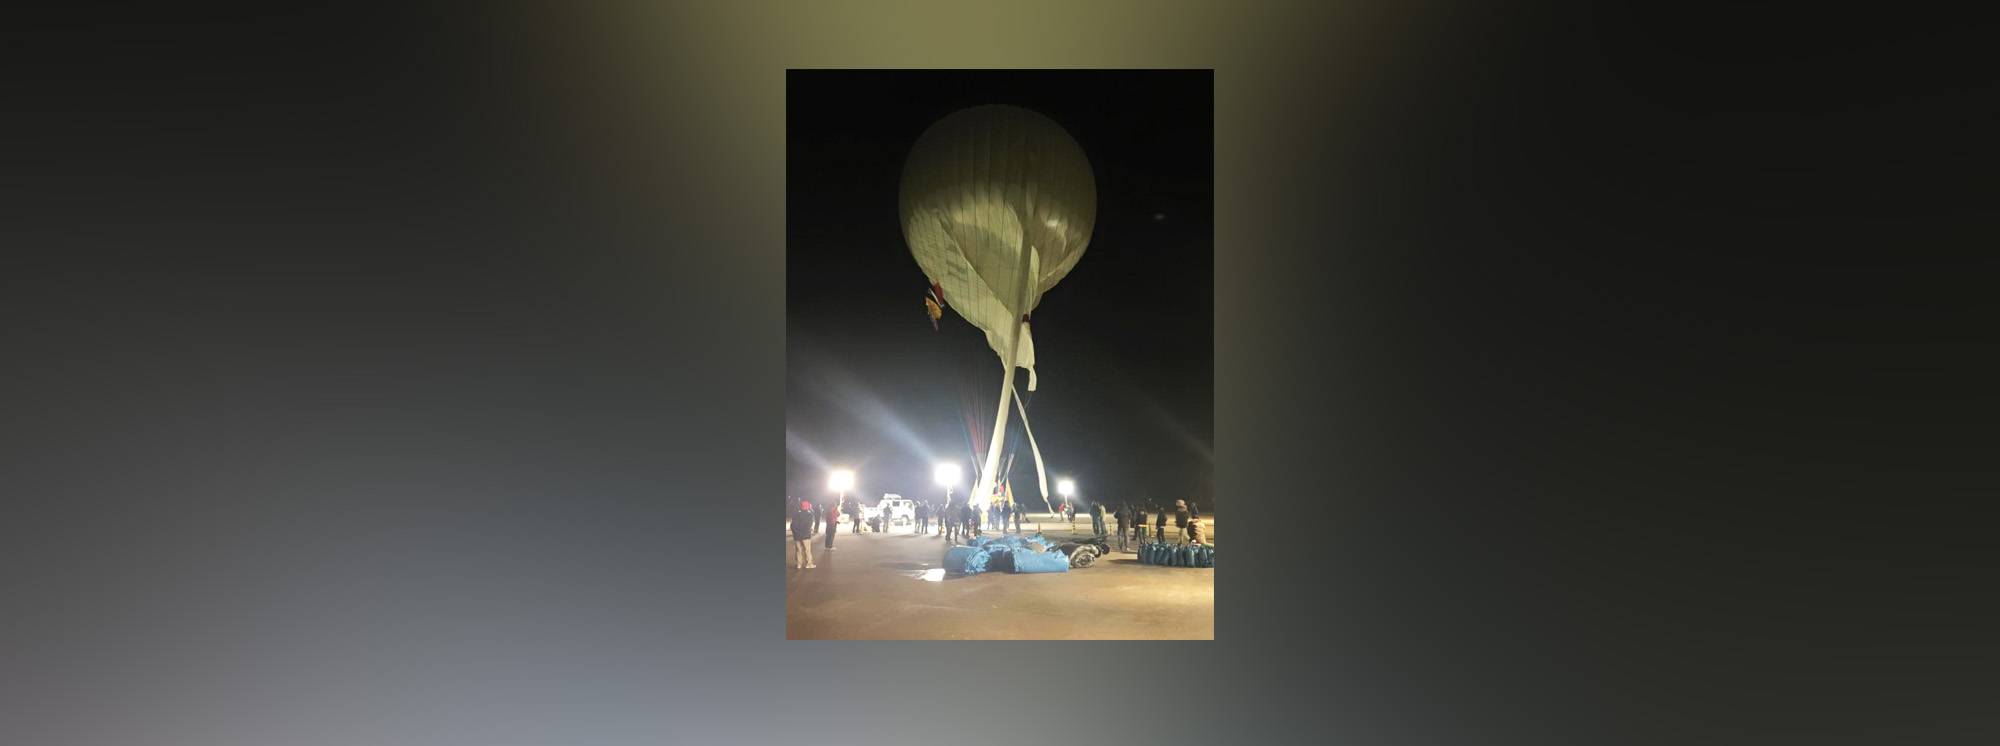 PHOTO: The Two Eagles balloon is readied for flight in Saga, Saga Prefecture, Japan, Jan. 25, 2015